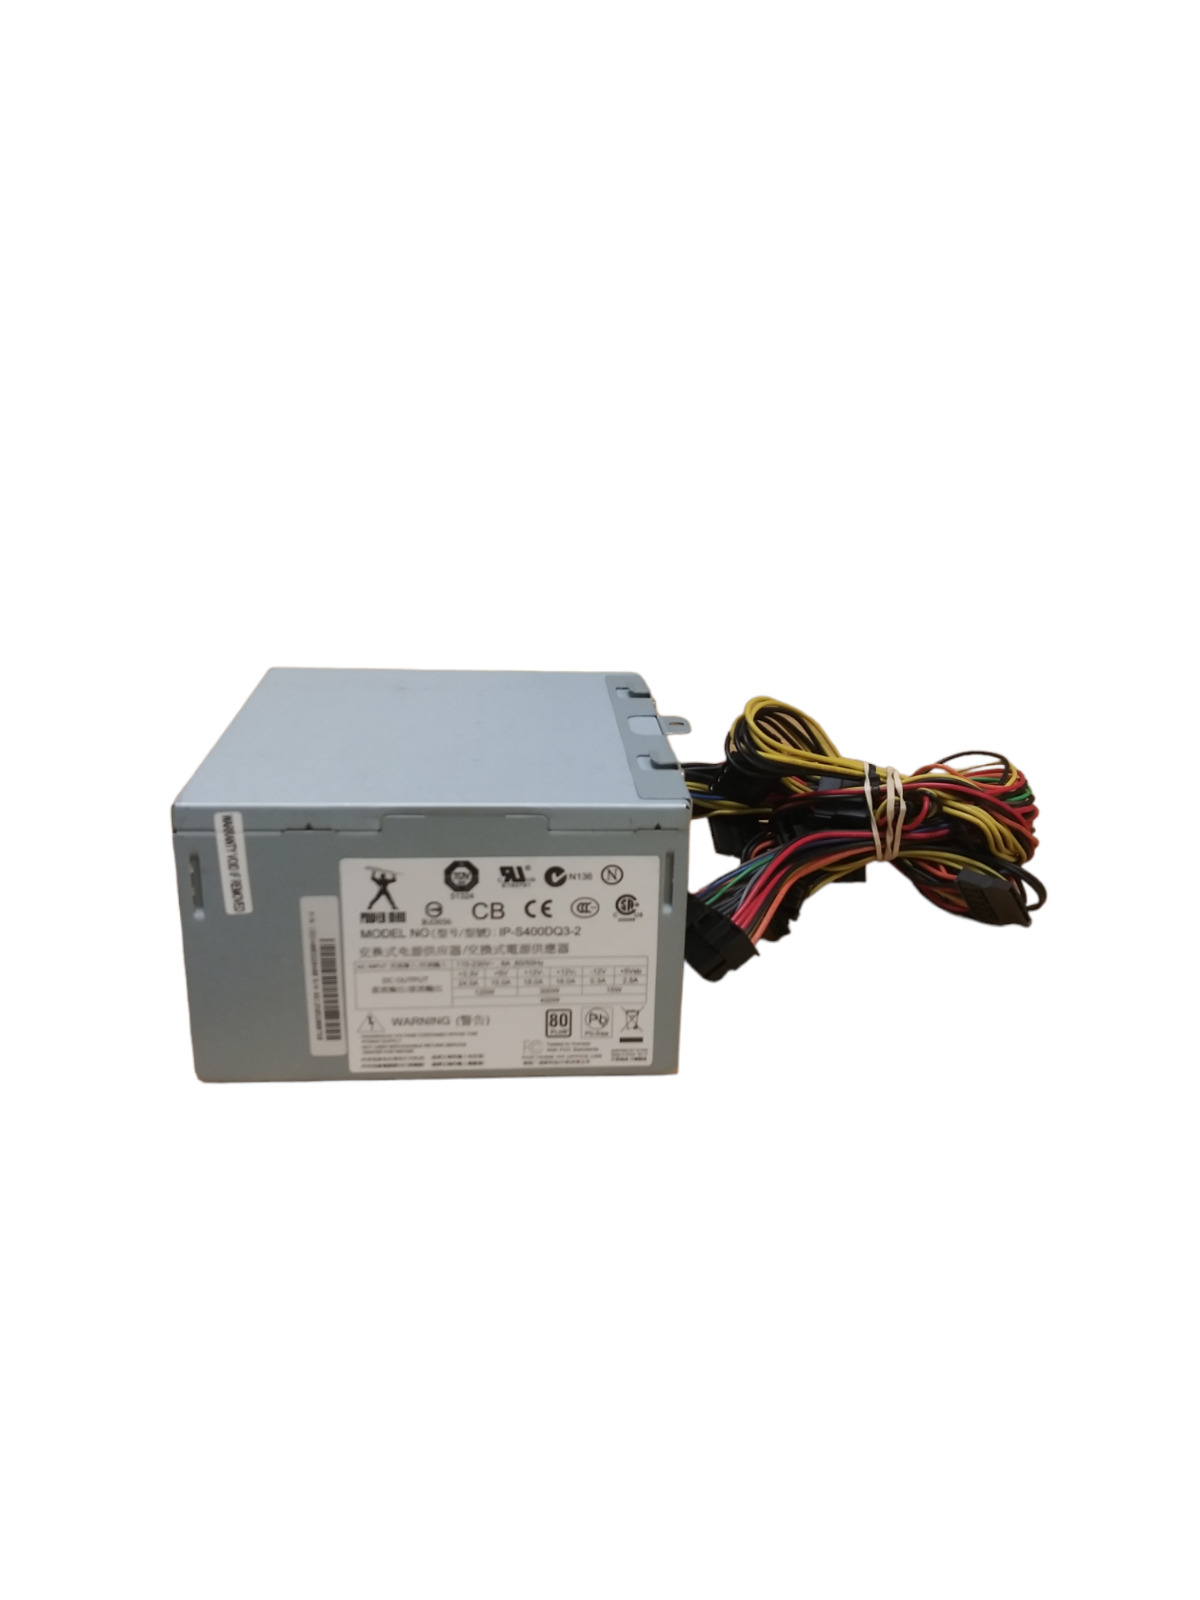 POWER MAN IP-S400DQ3-2 400W Desktop Power Supply  76-1